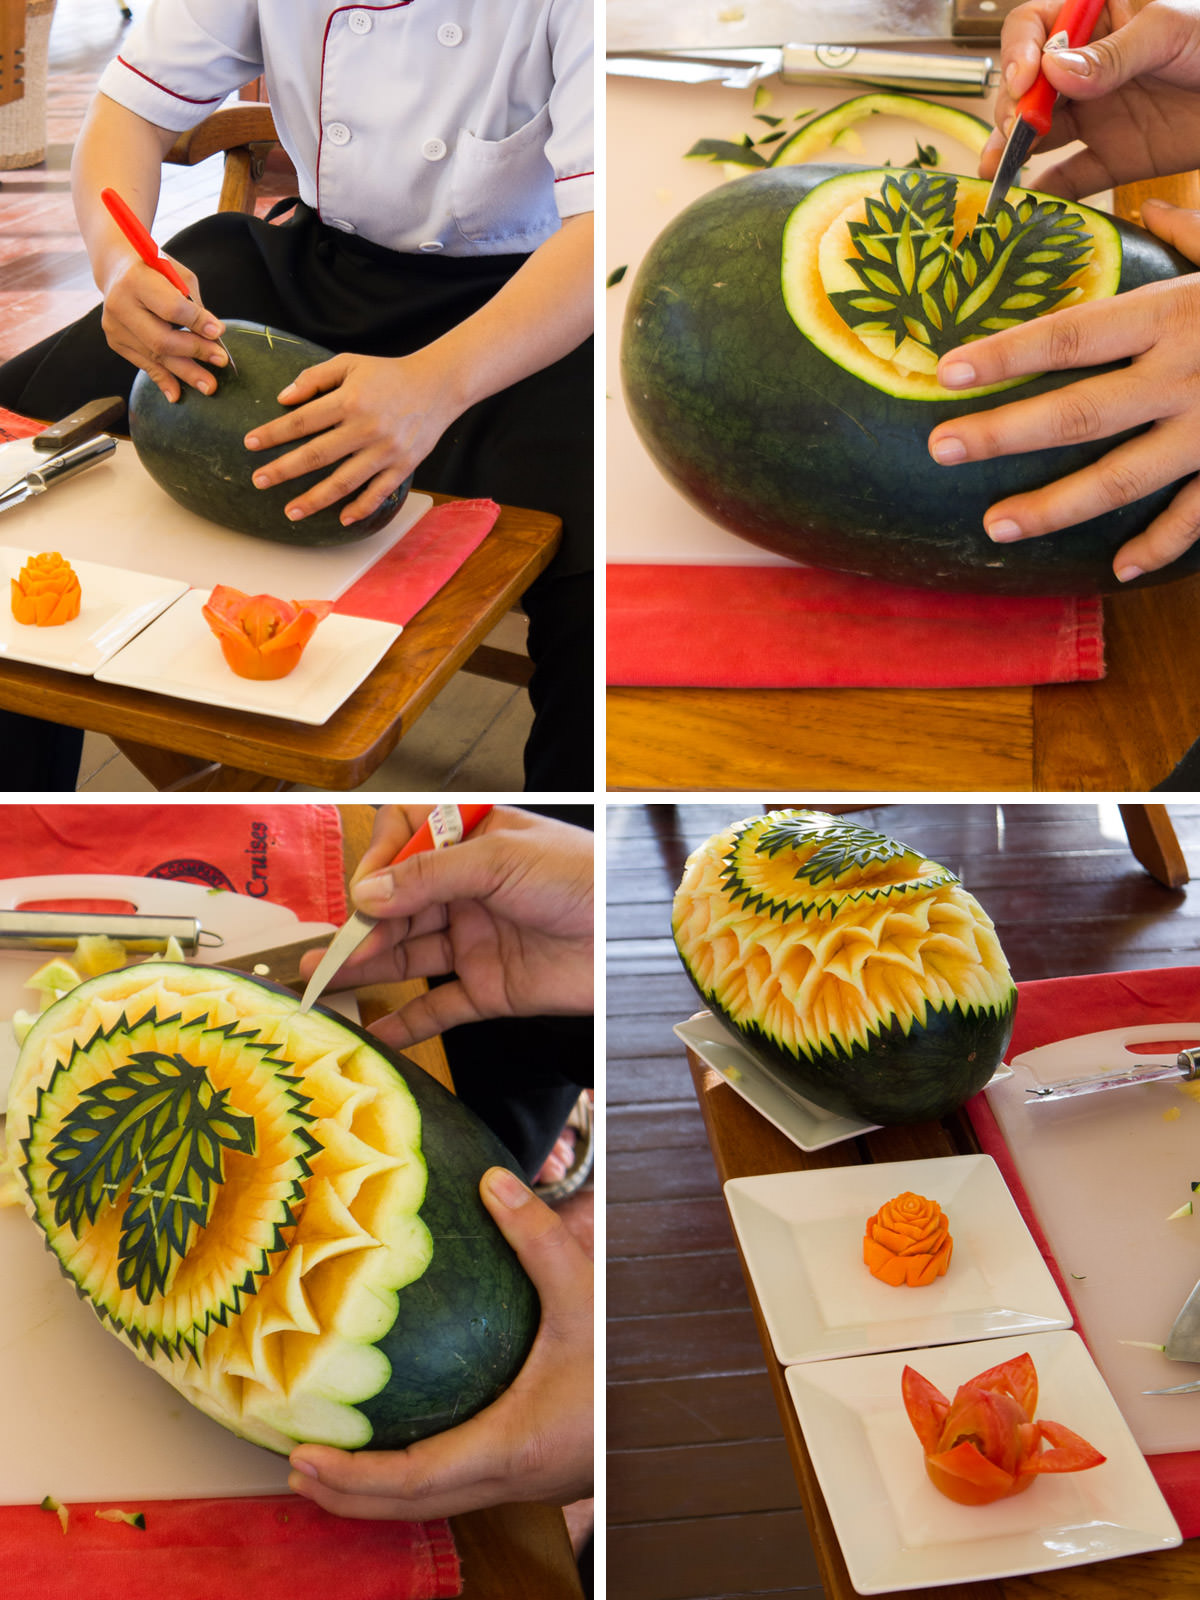 Carving a melon